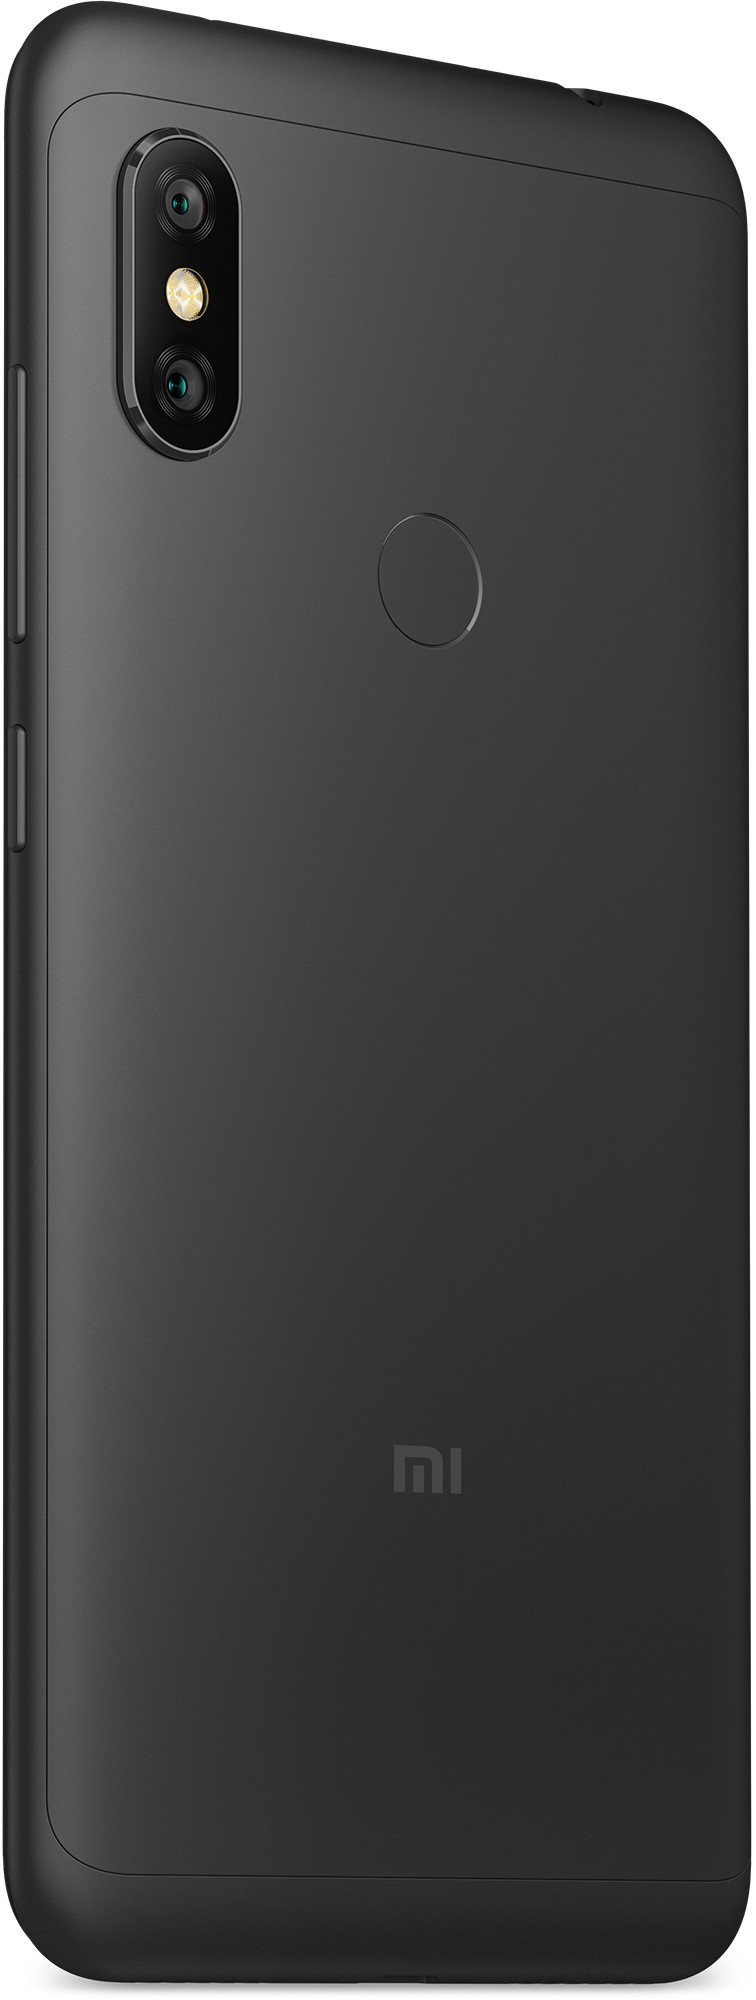 Xiaomi Redmi Note 6 Pro Global Version